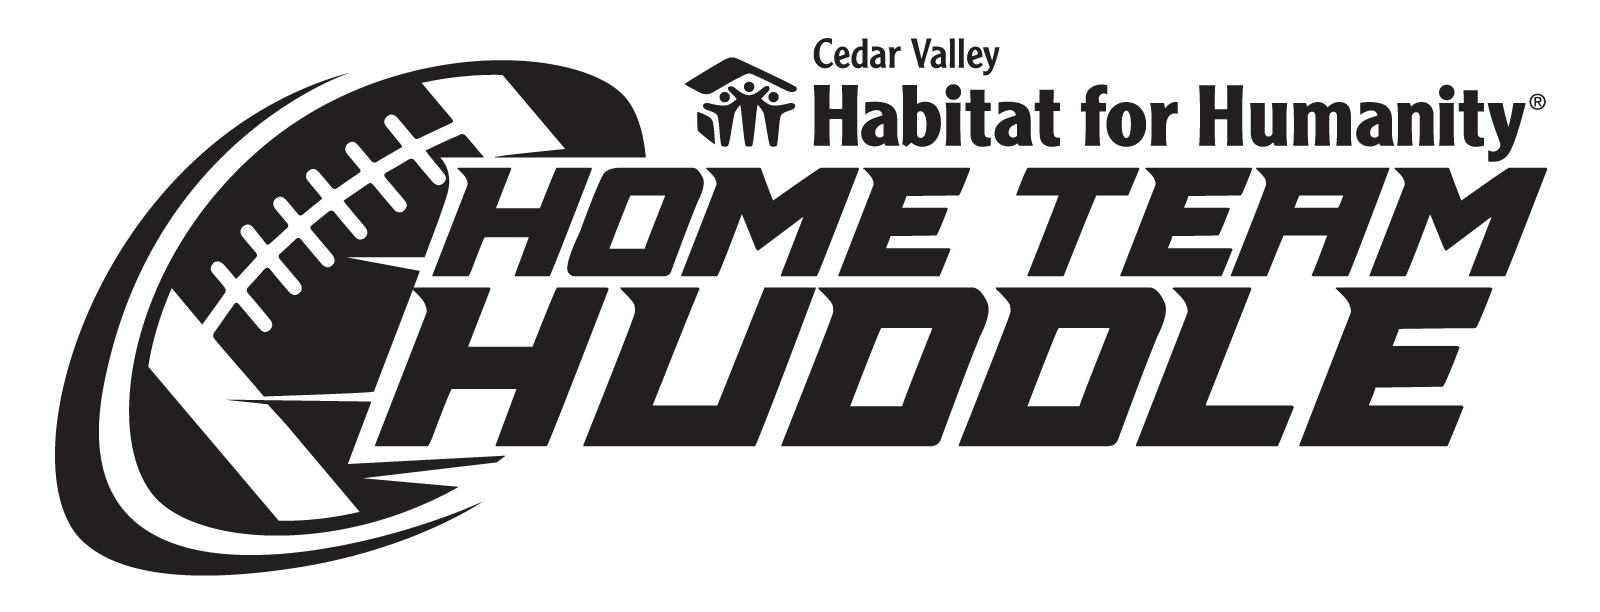 Cedar Valley Habitat for Humanity Home Team Huddle logo